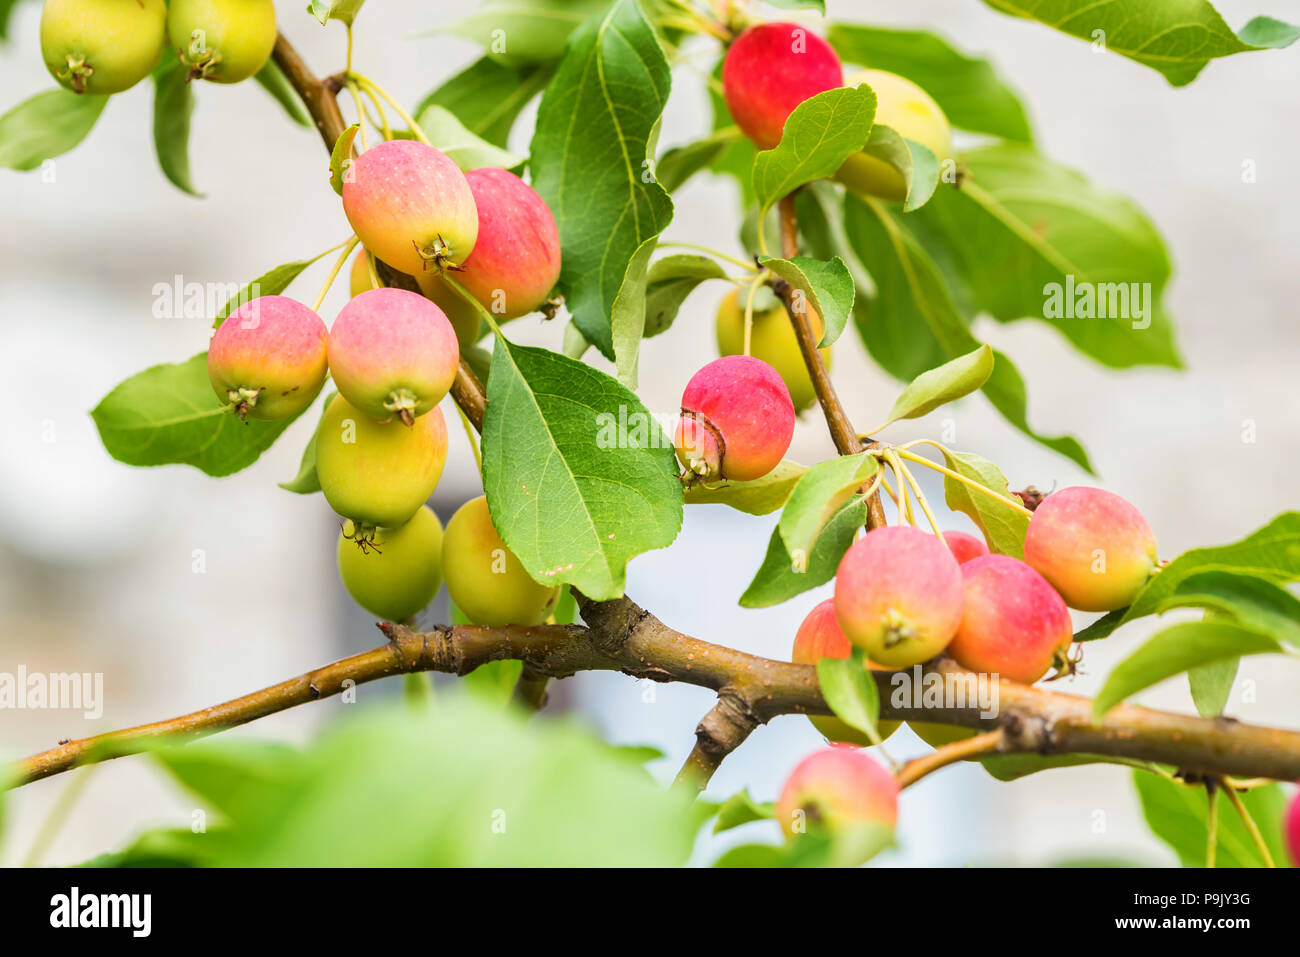 Ripening Chinese apple or Malus prunifolia Stock Photo